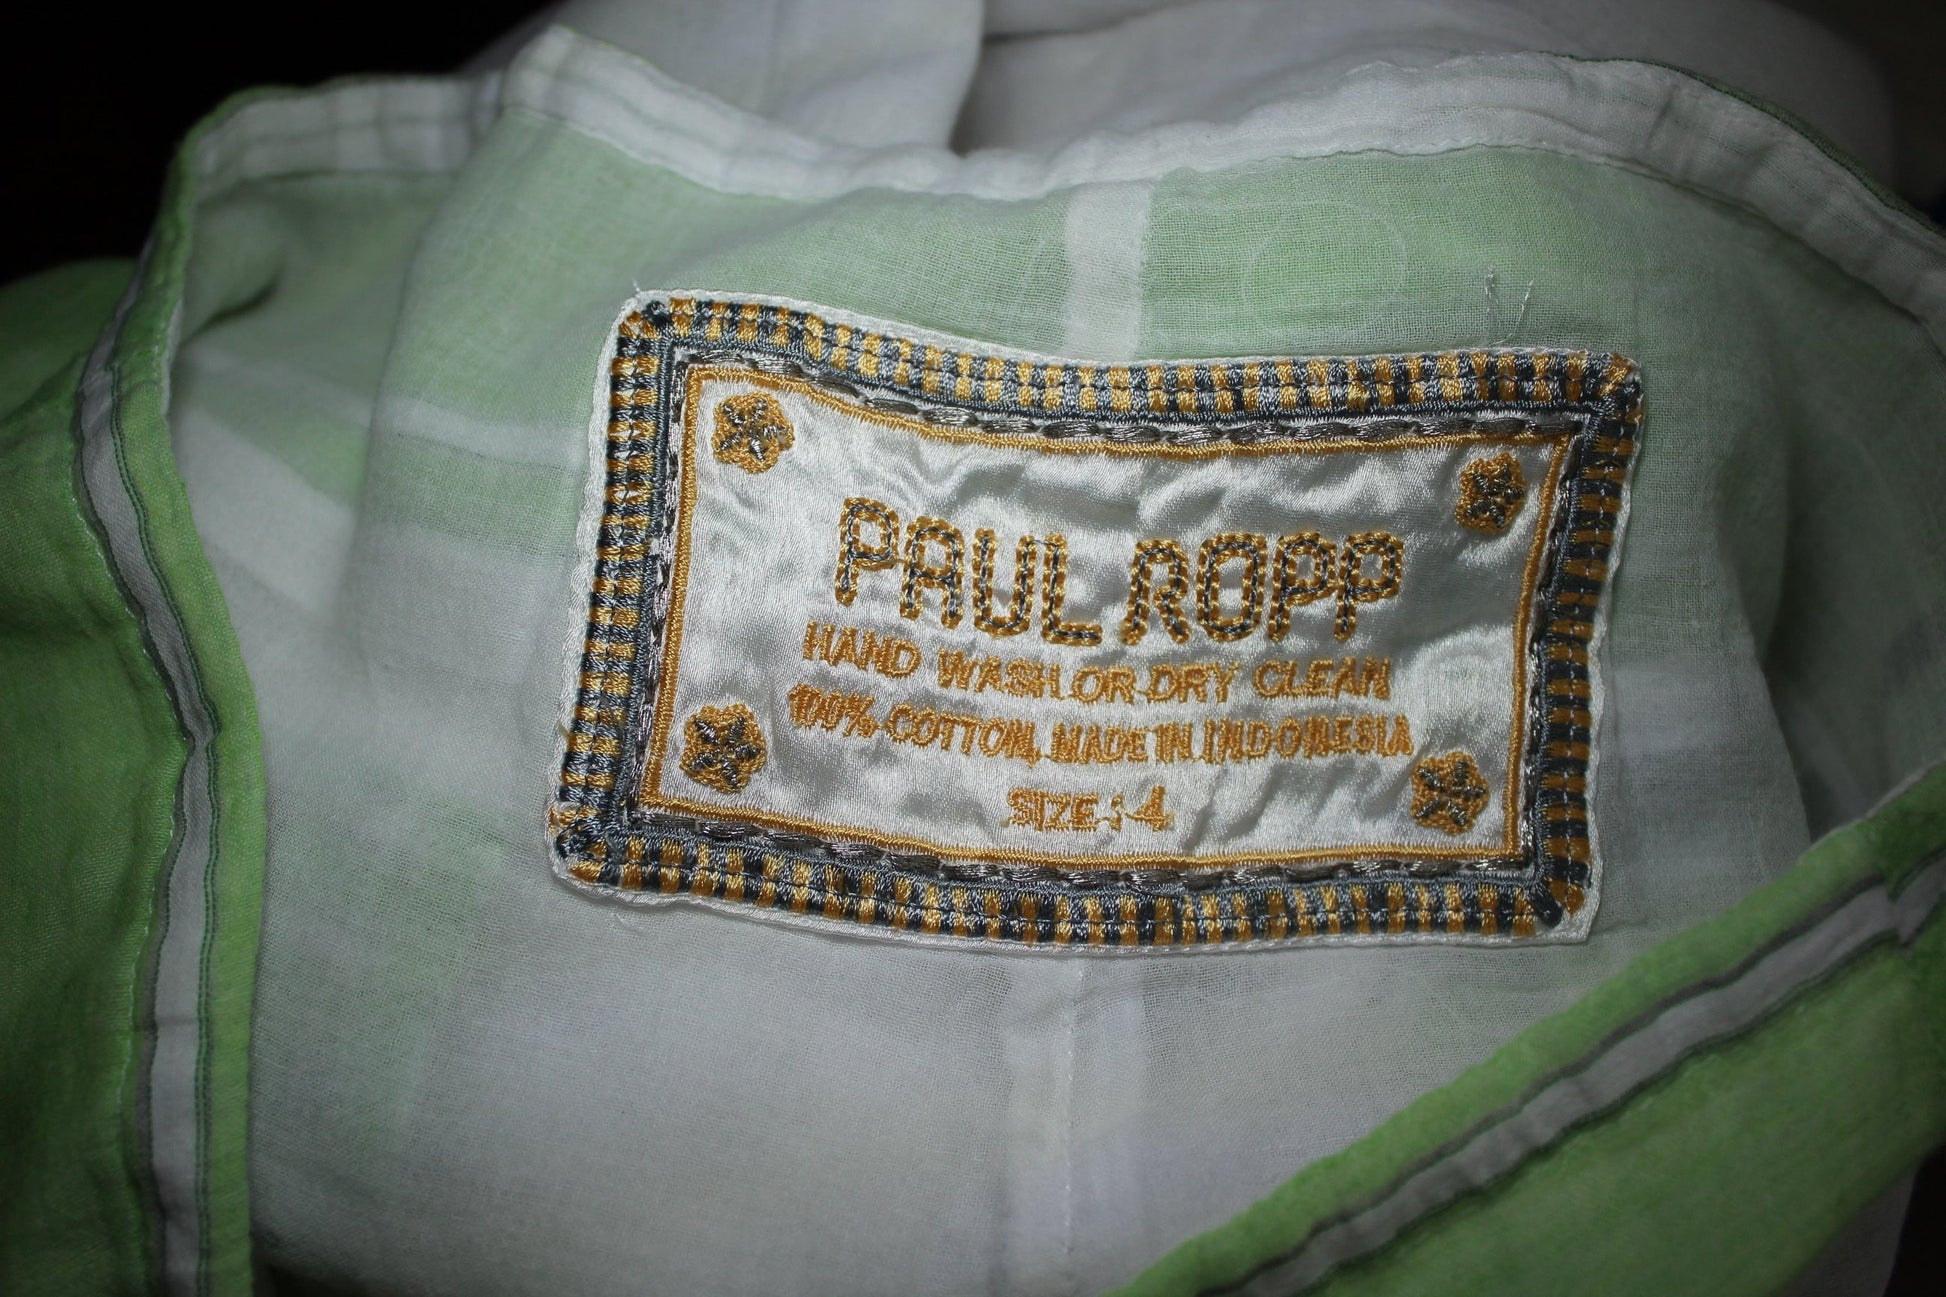 Paul Ropp Drawstring Pants Fully Lined Sheer 100% Light Cotton Size 14 original tag